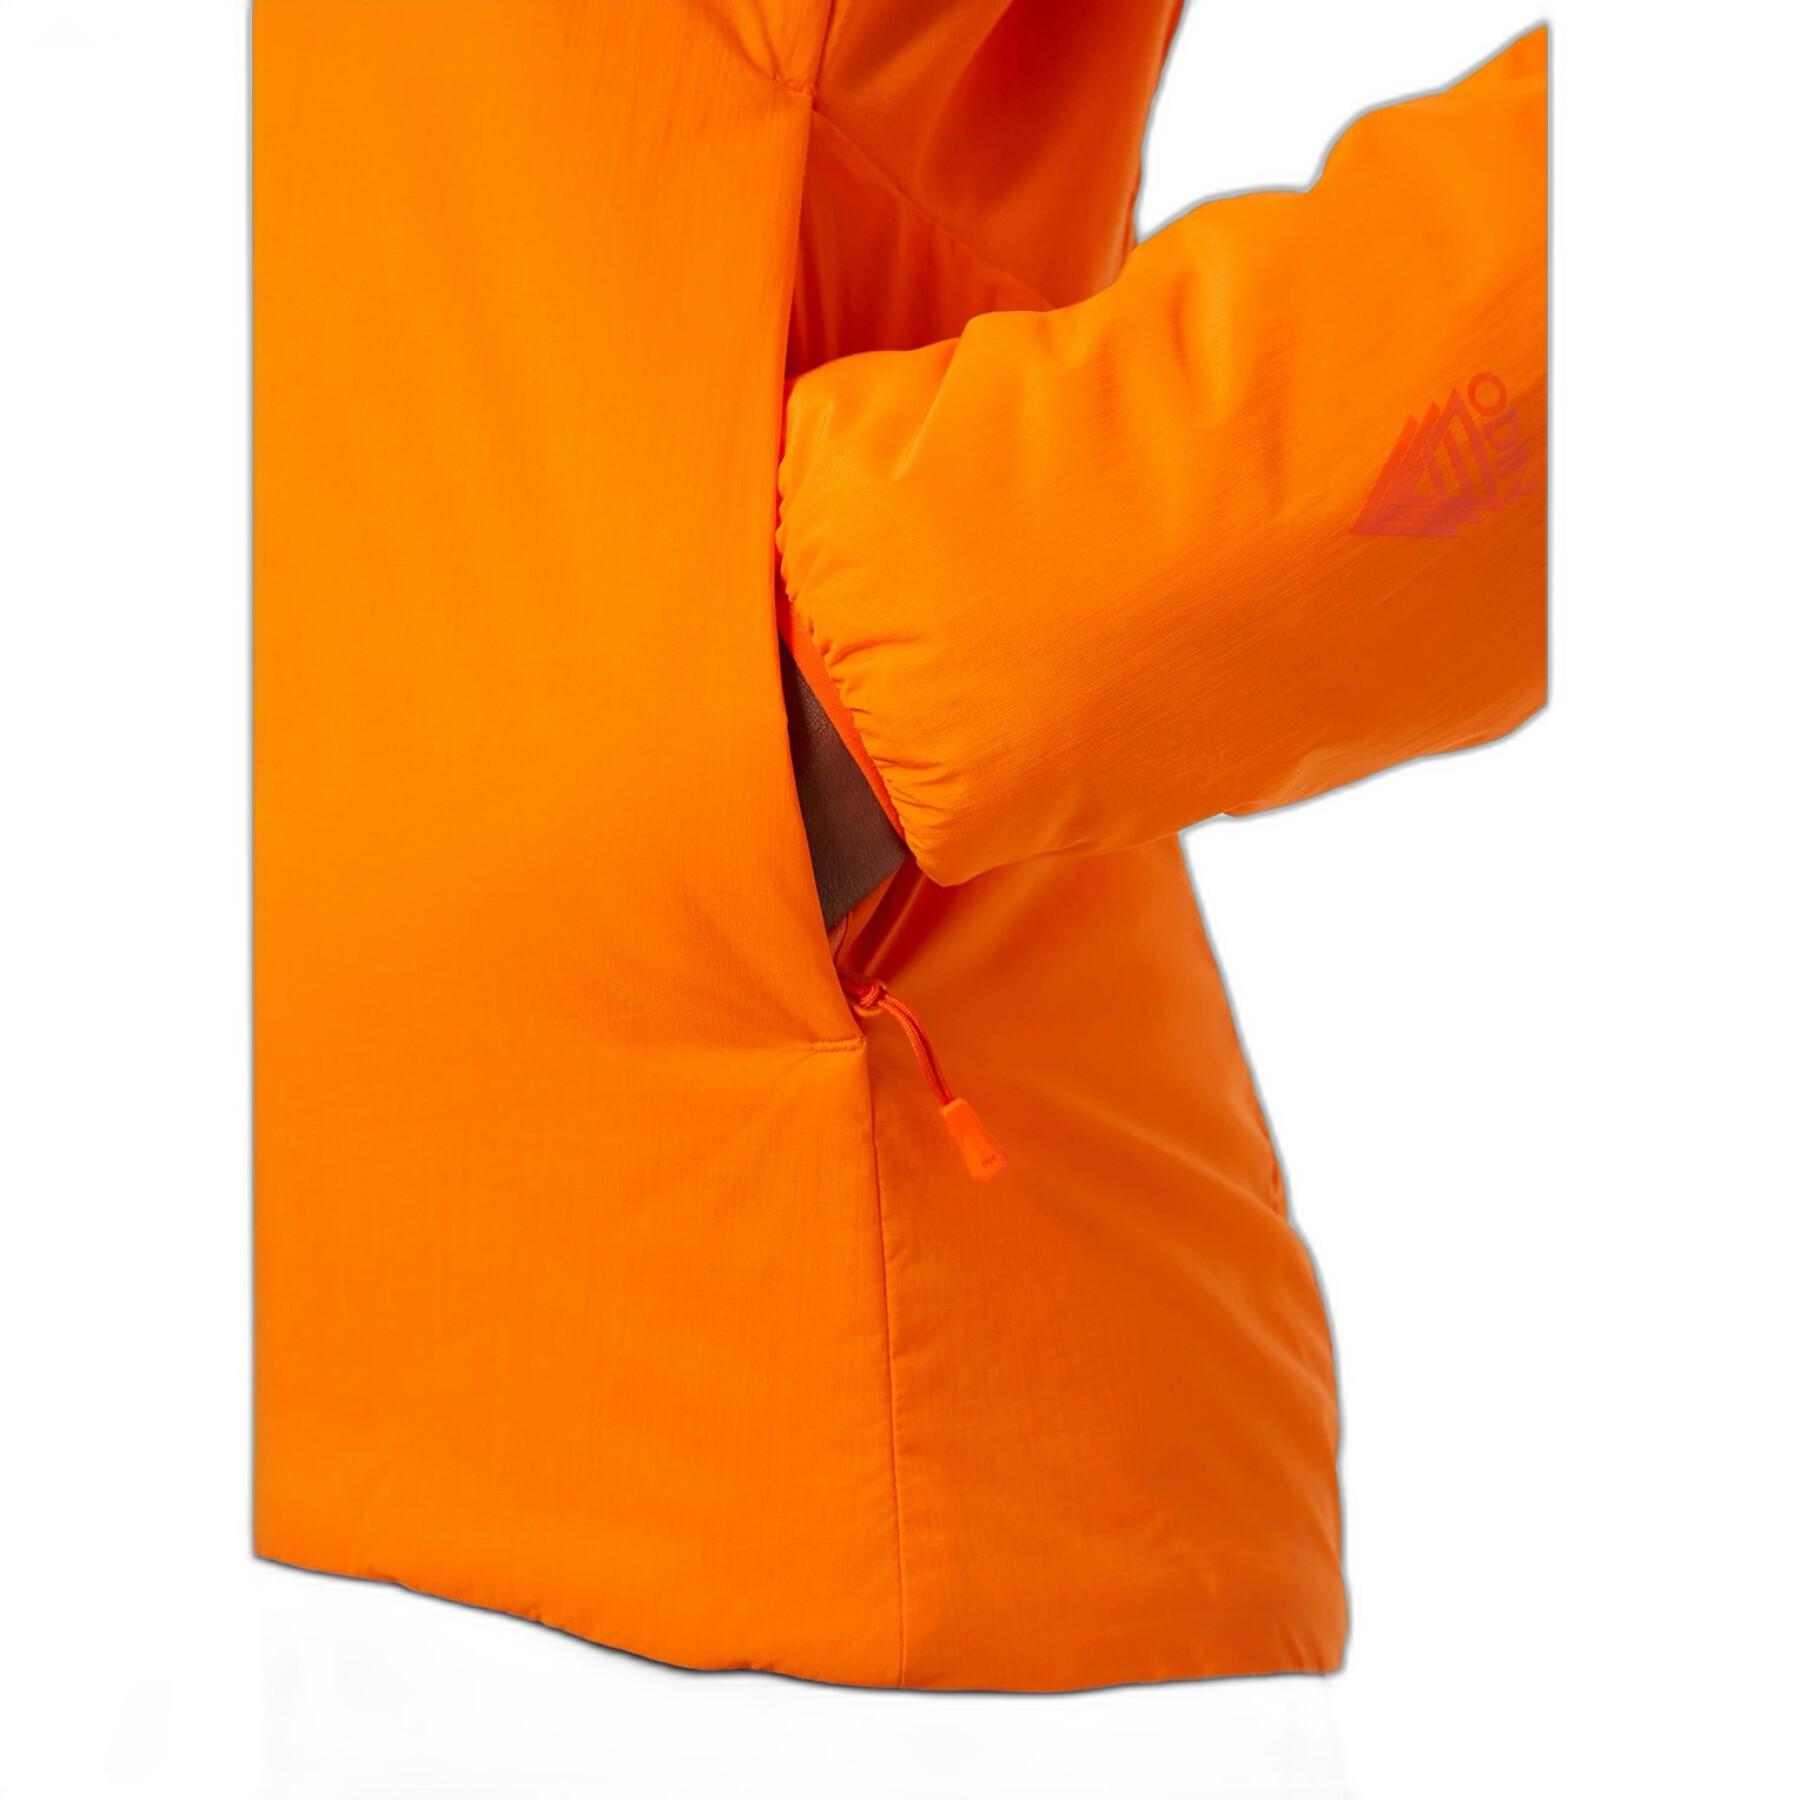 Damska elastyczna kurtka izolacyjna z kapturem Helly Hansen odin